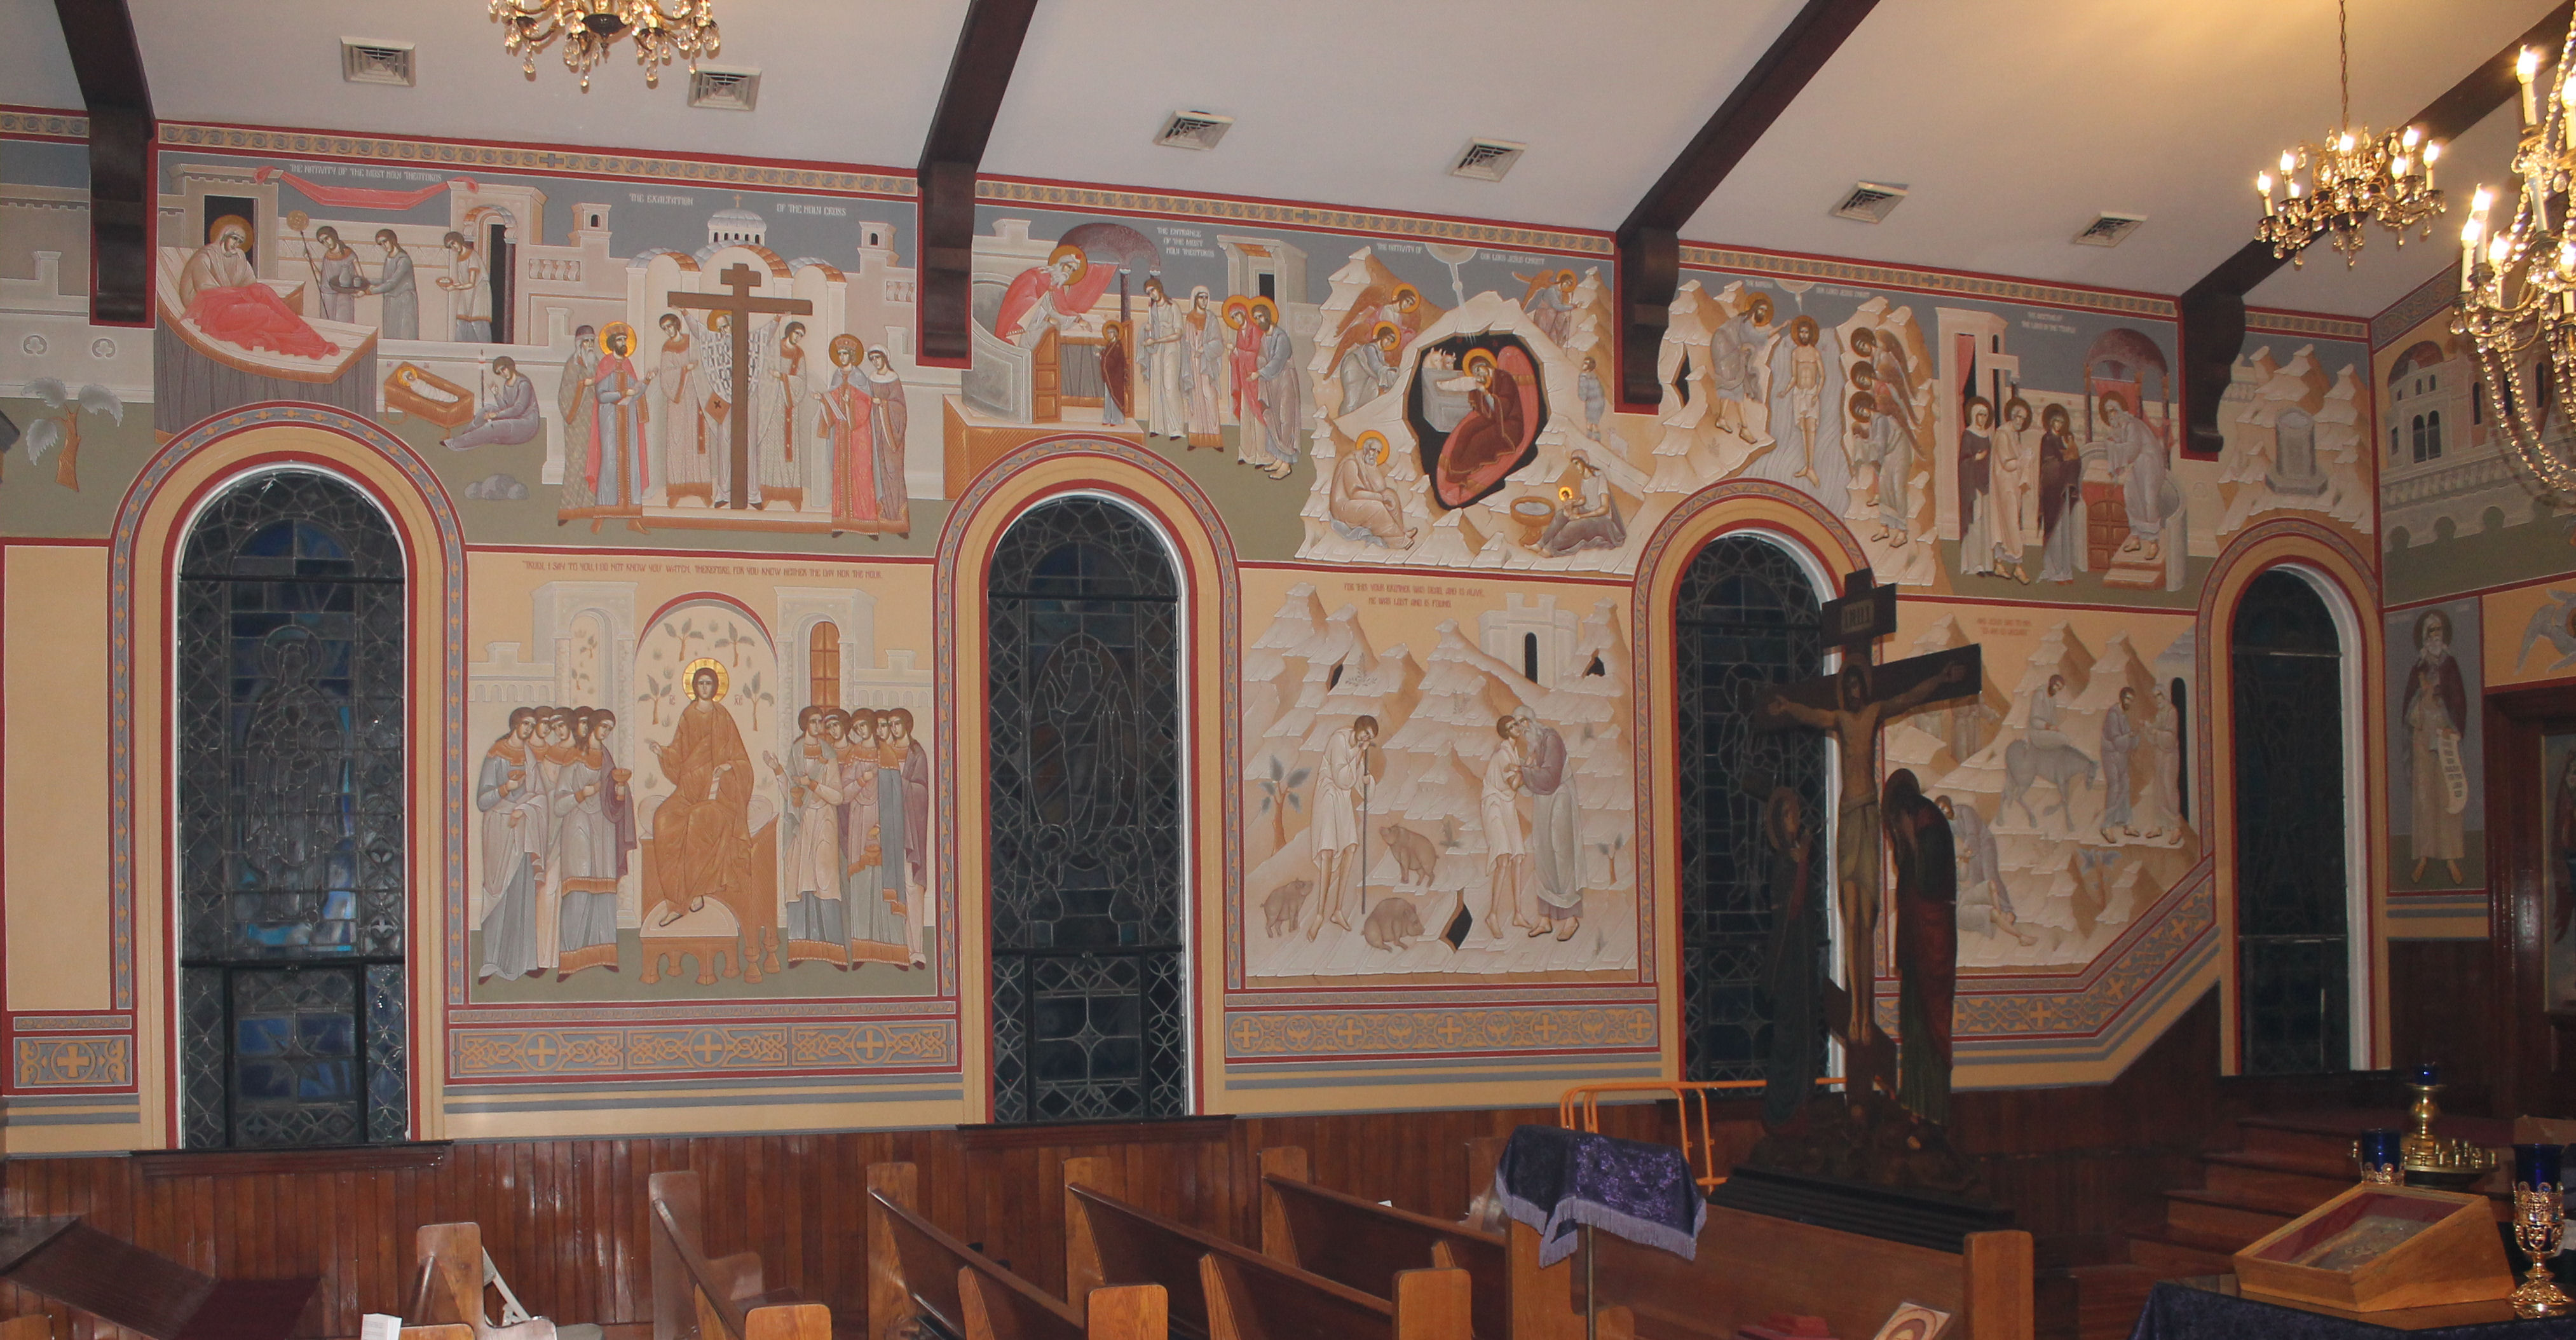 Wall painting north wall 2 - St. Nicholas Orthodox Church Salem MA by Anna Gouriev-Pokrovsky